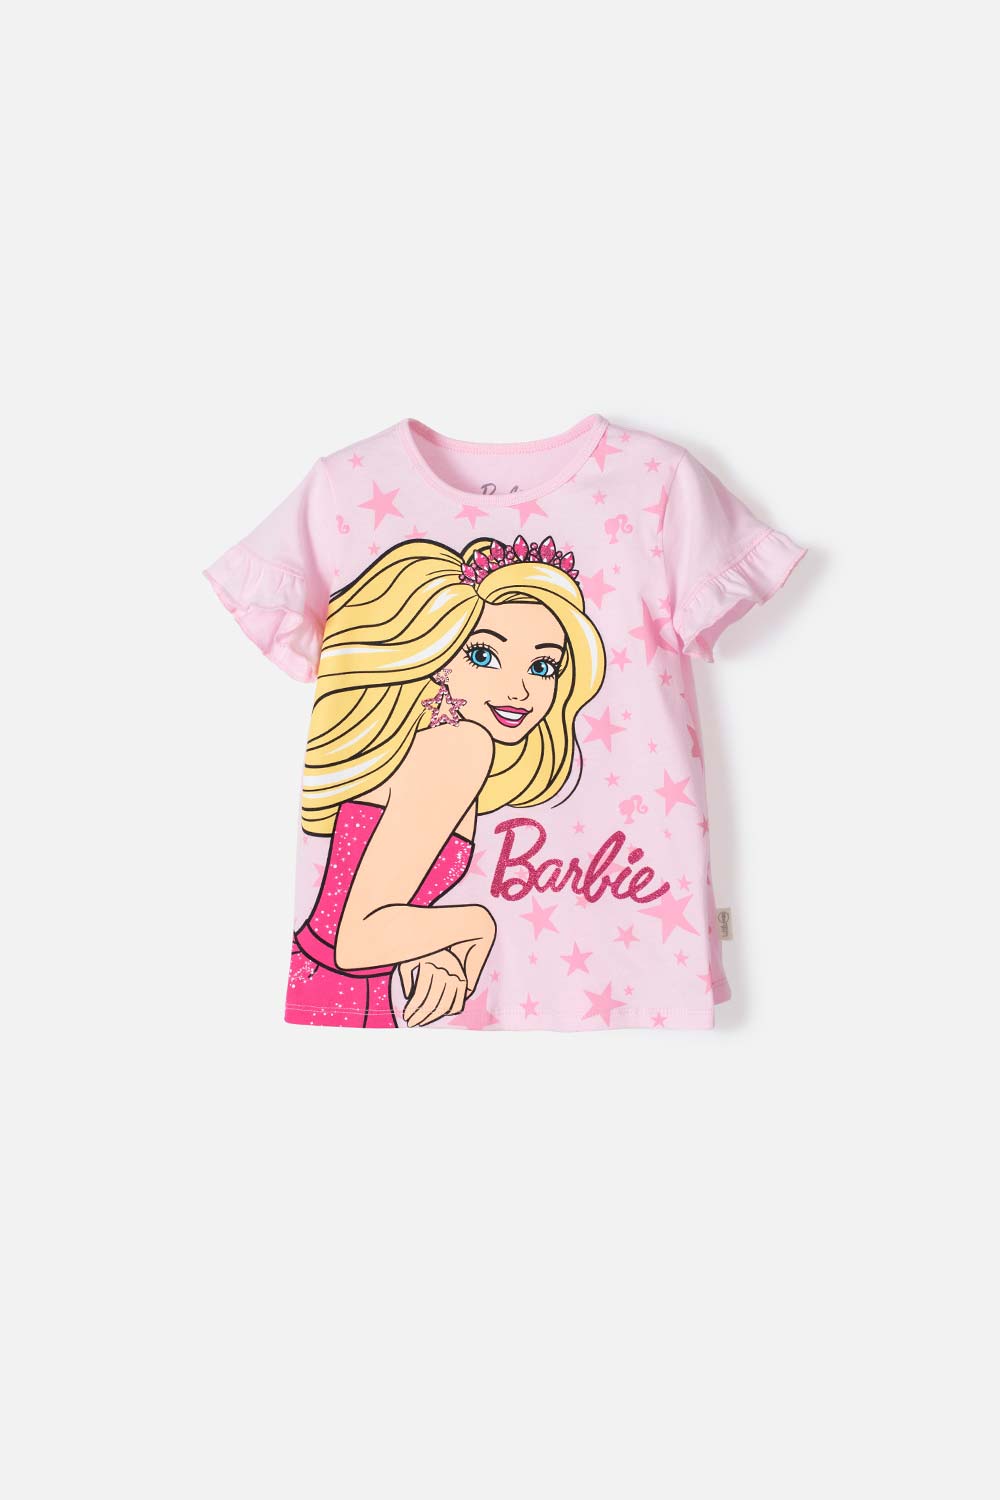 Camiseta de Barbie rosada manga corta para niña - Ponemos la Fantasía!